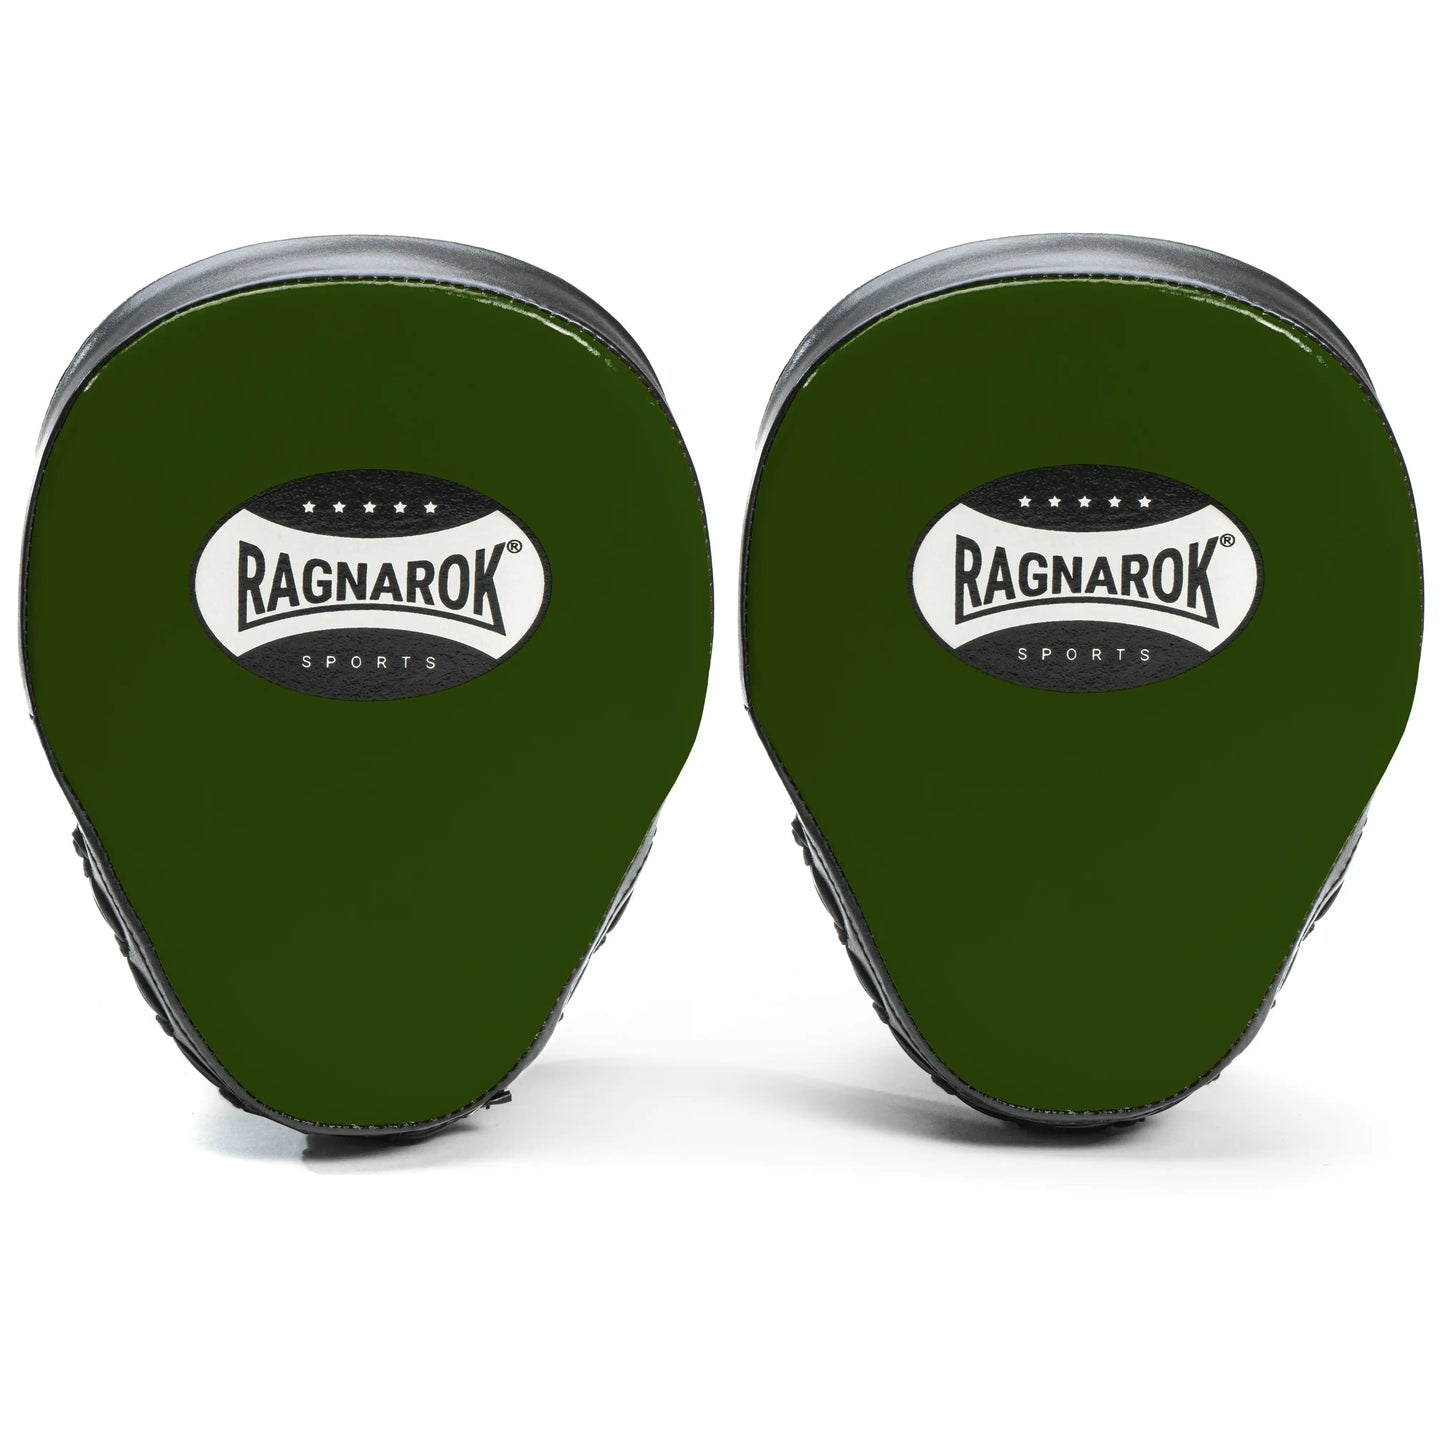 Boxing pads Ragnarok Sports olive green